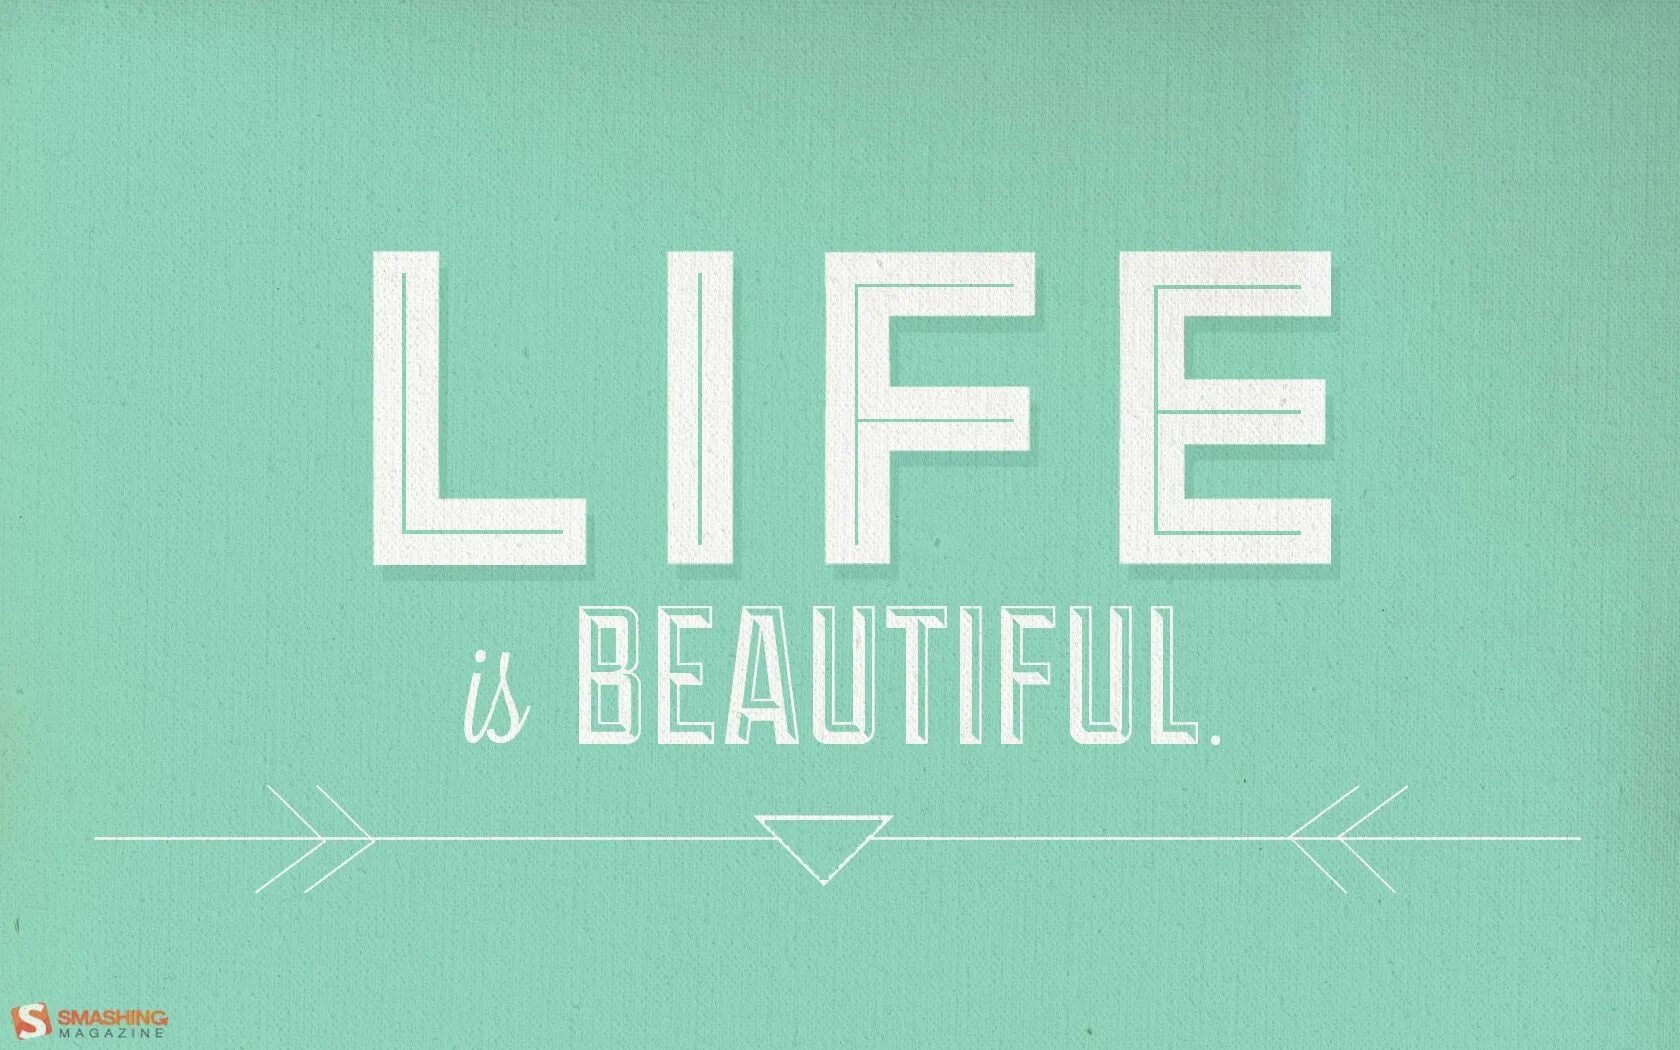 Life is round. Life надпись. Картинки с надписью Life. Beautiful Life надпись. Life is beautiful картинки.